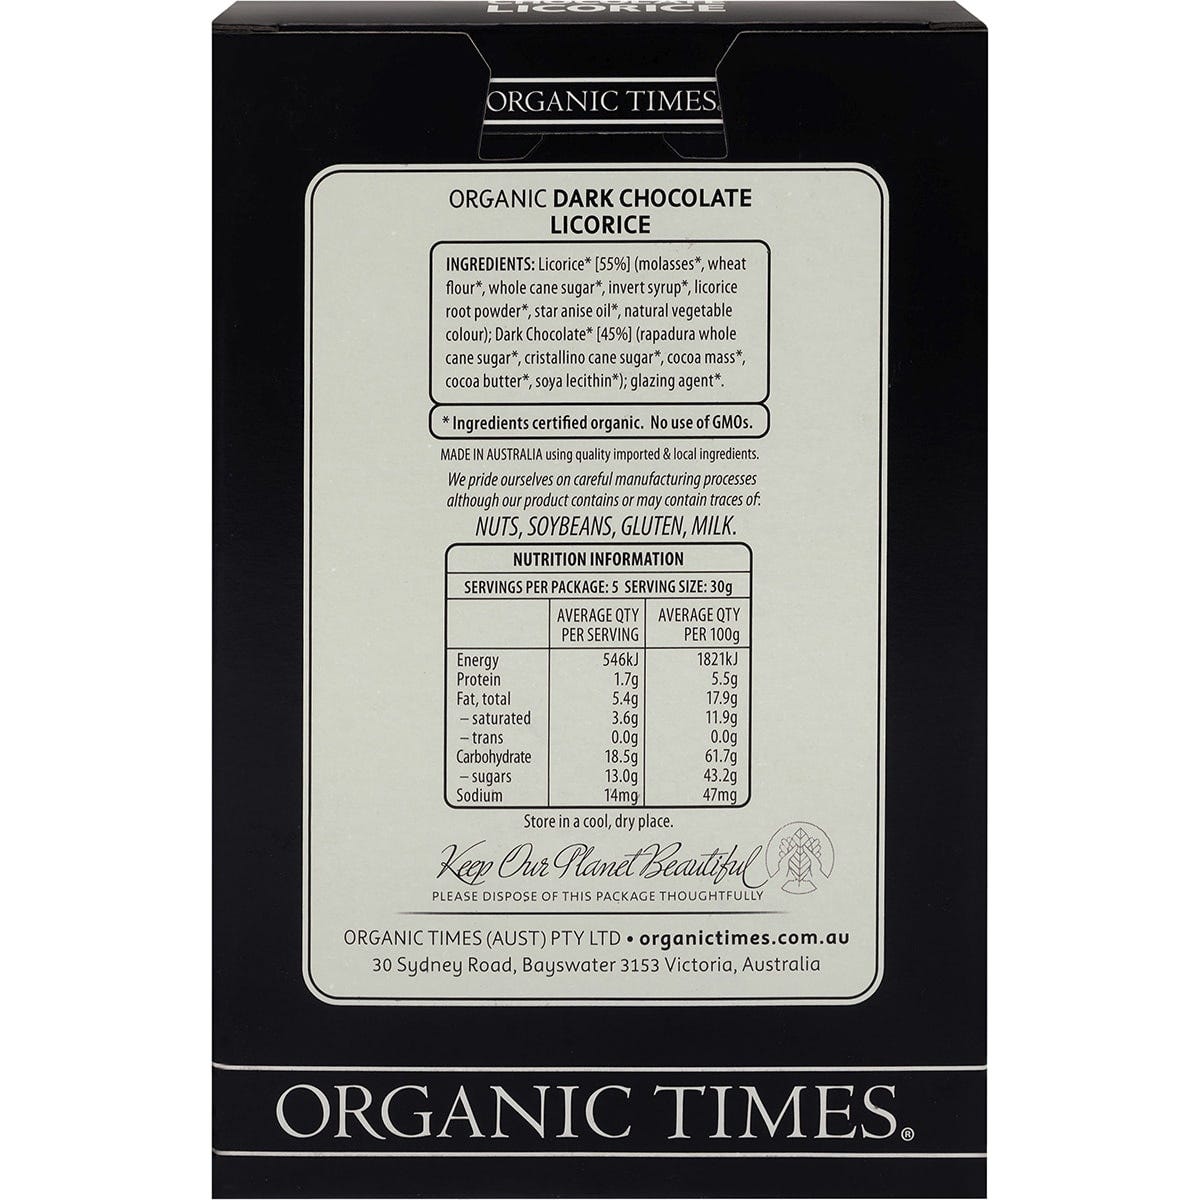 Organic Times Dark Chocolate Licorice 150g - Dr Earth - Chocolate & Carob